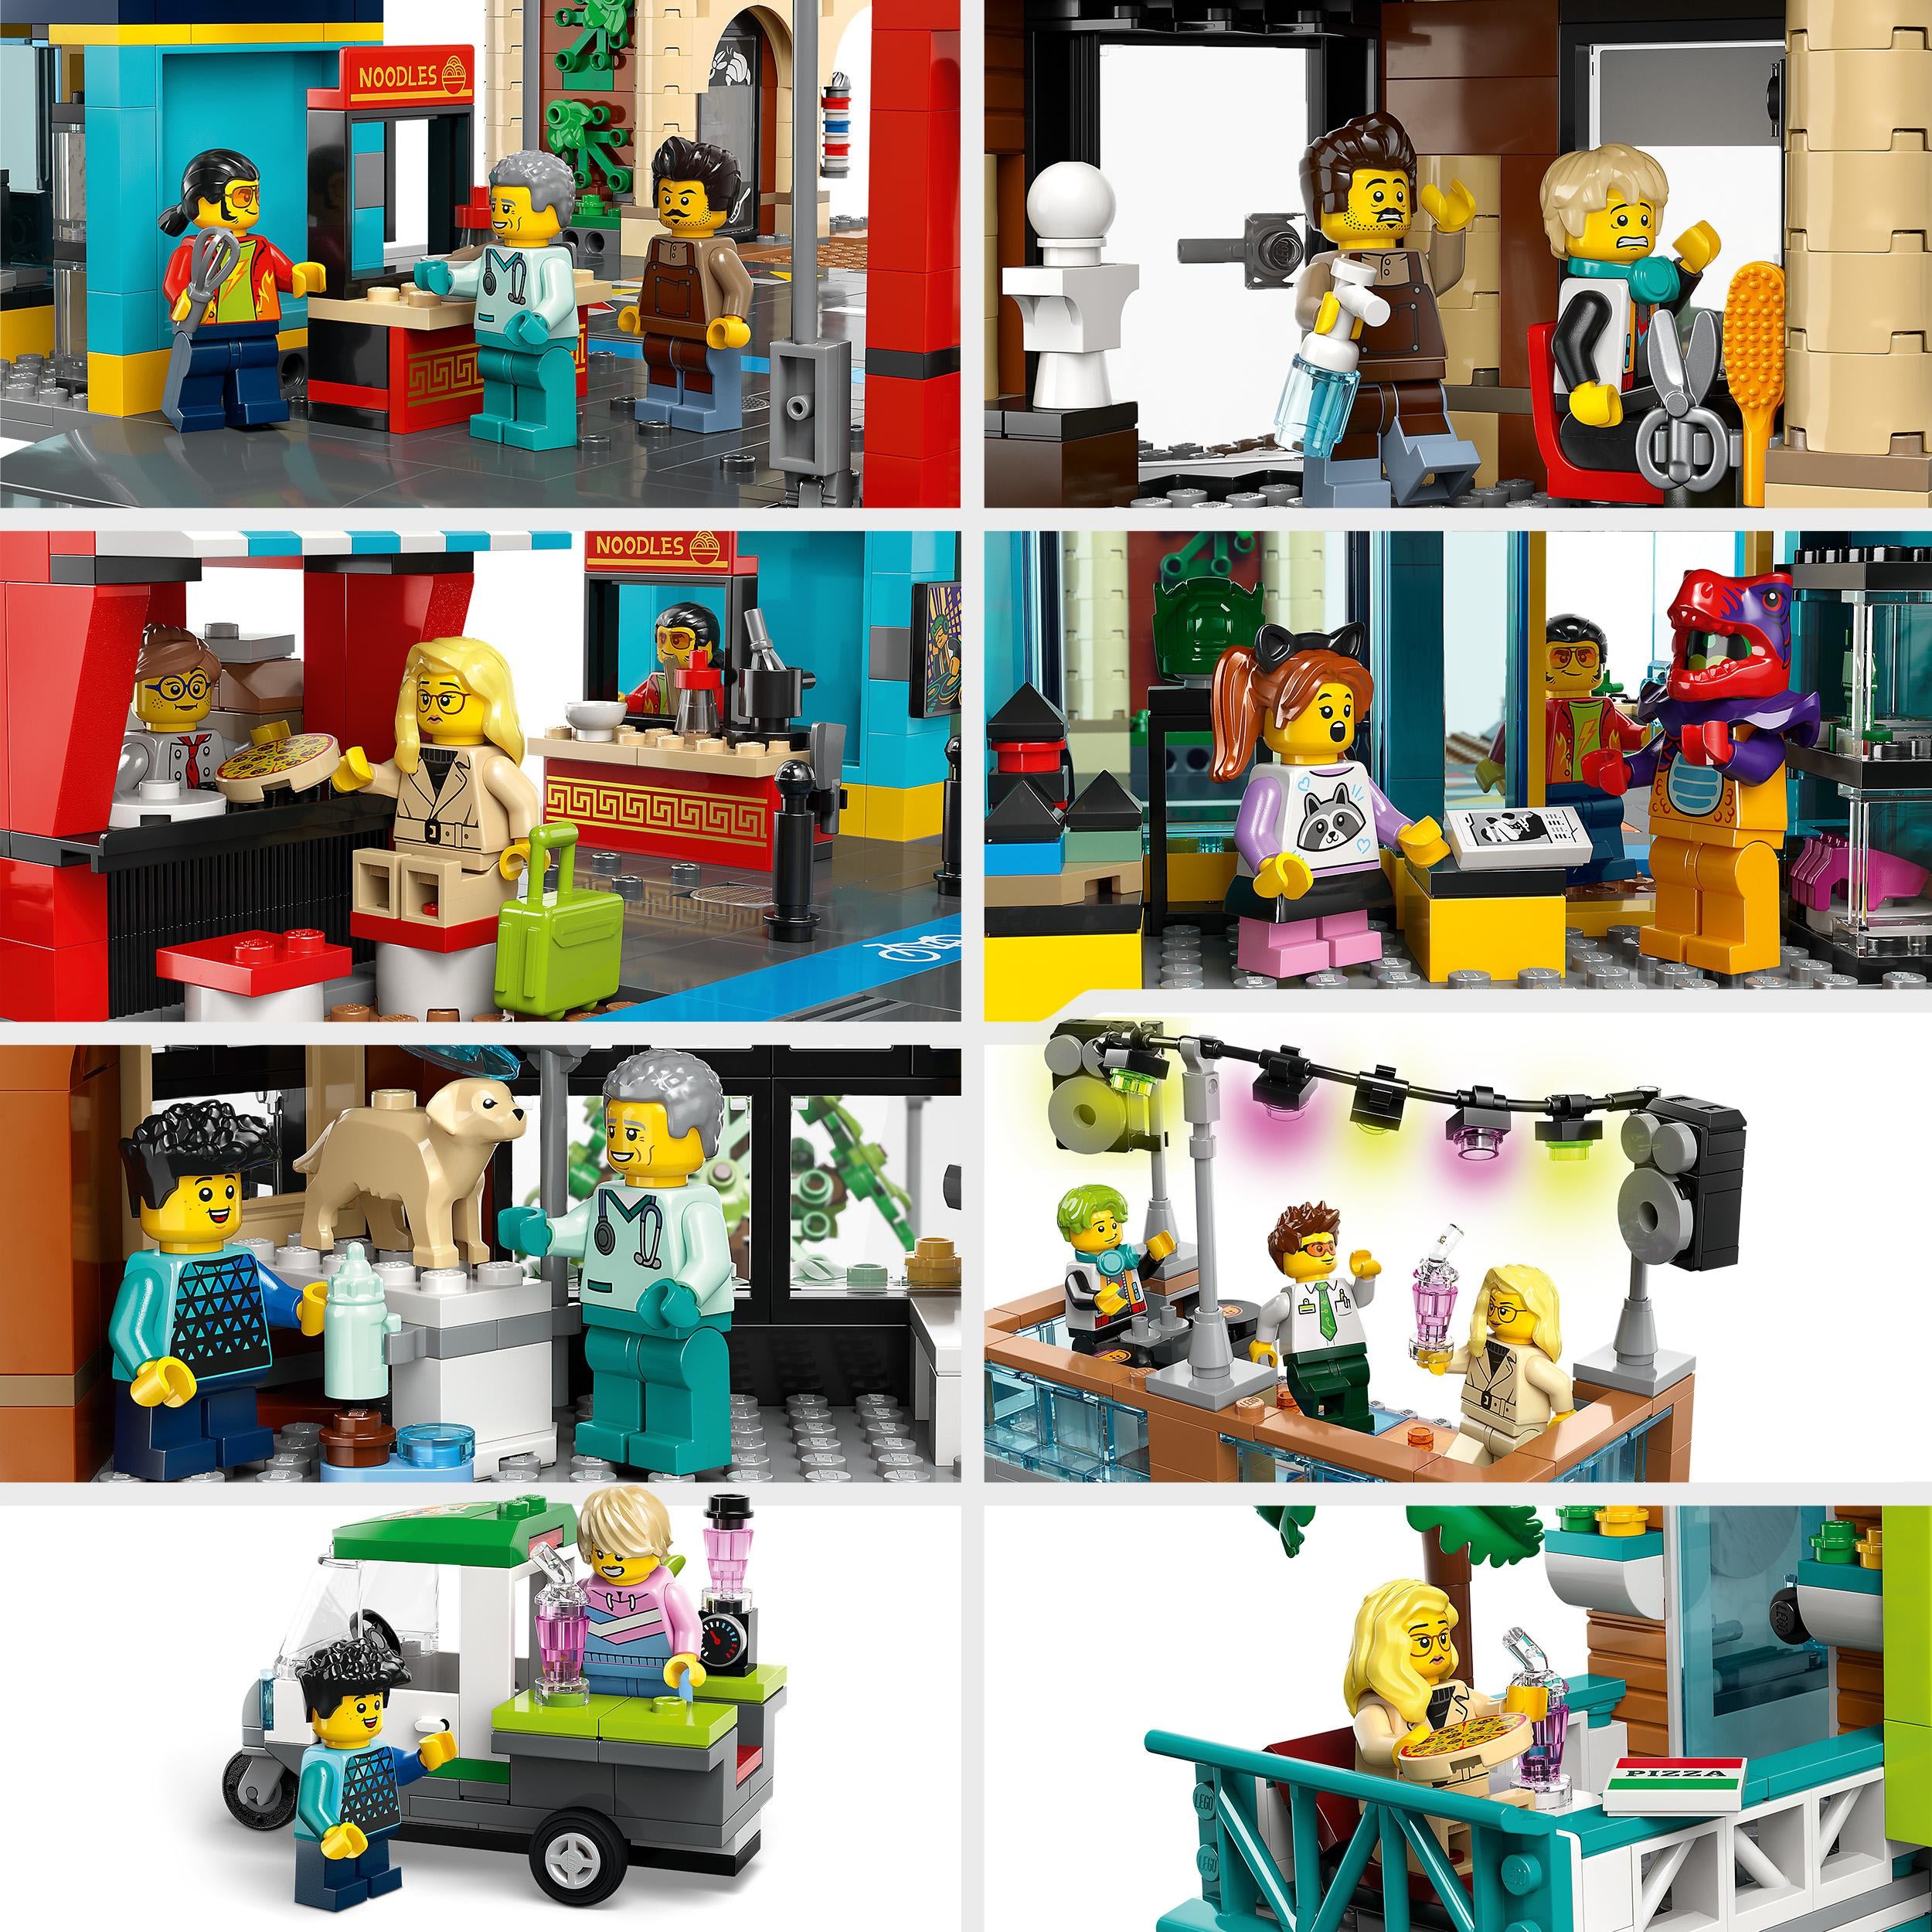 60380 - LEGO My City - Downtown